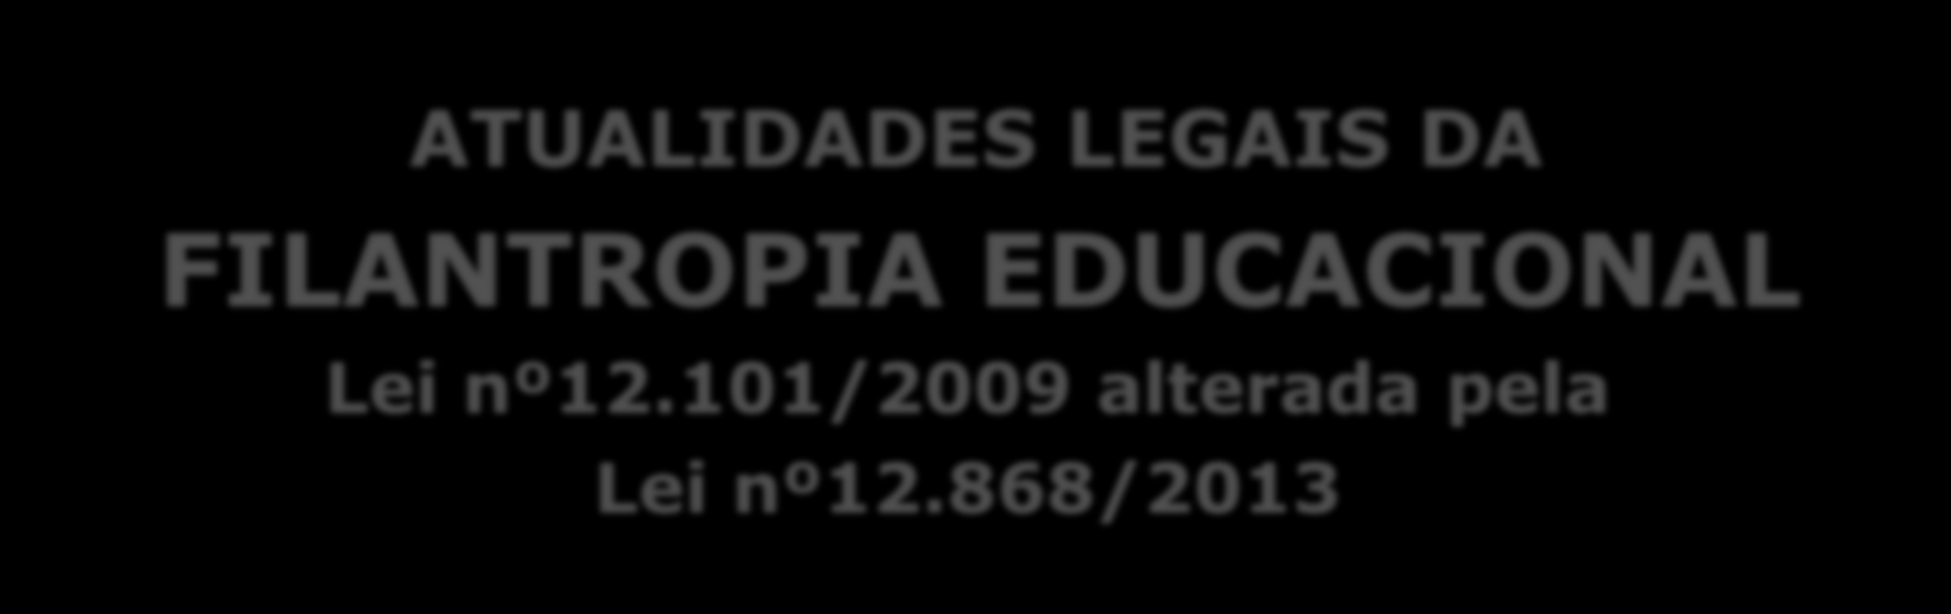 ATUALIDADES LEGAIS DA FILANTROPIA EDUCACIONAL Lei nº12.101/2009 alterada pela Lei nº12.